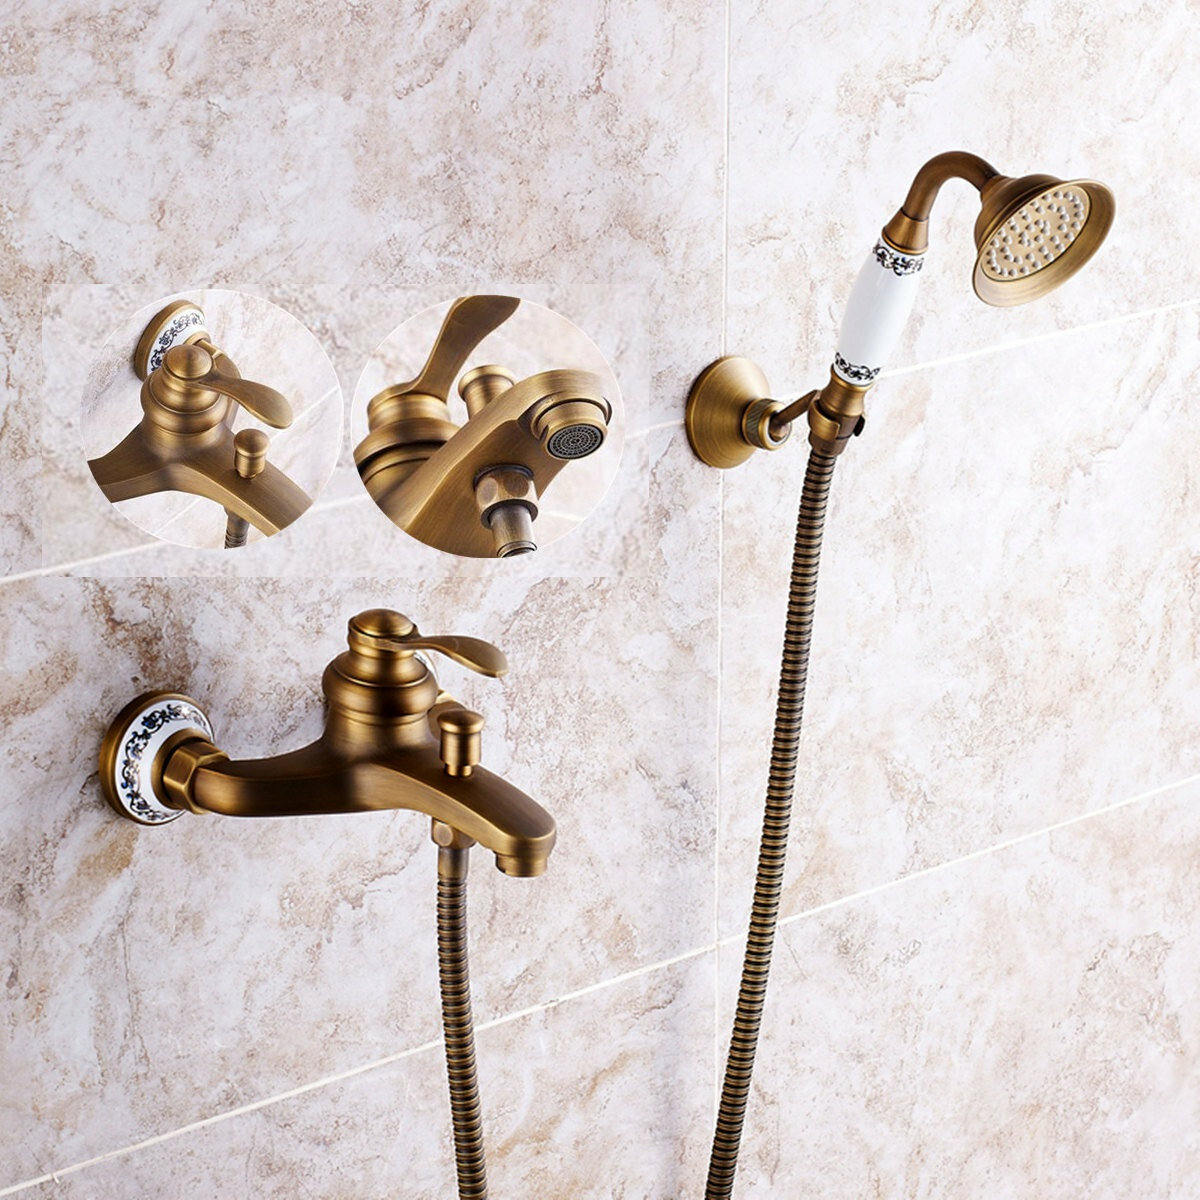 Antique Brass Shower Head Bathroom Tub Faucet Hand Held Tap Spray